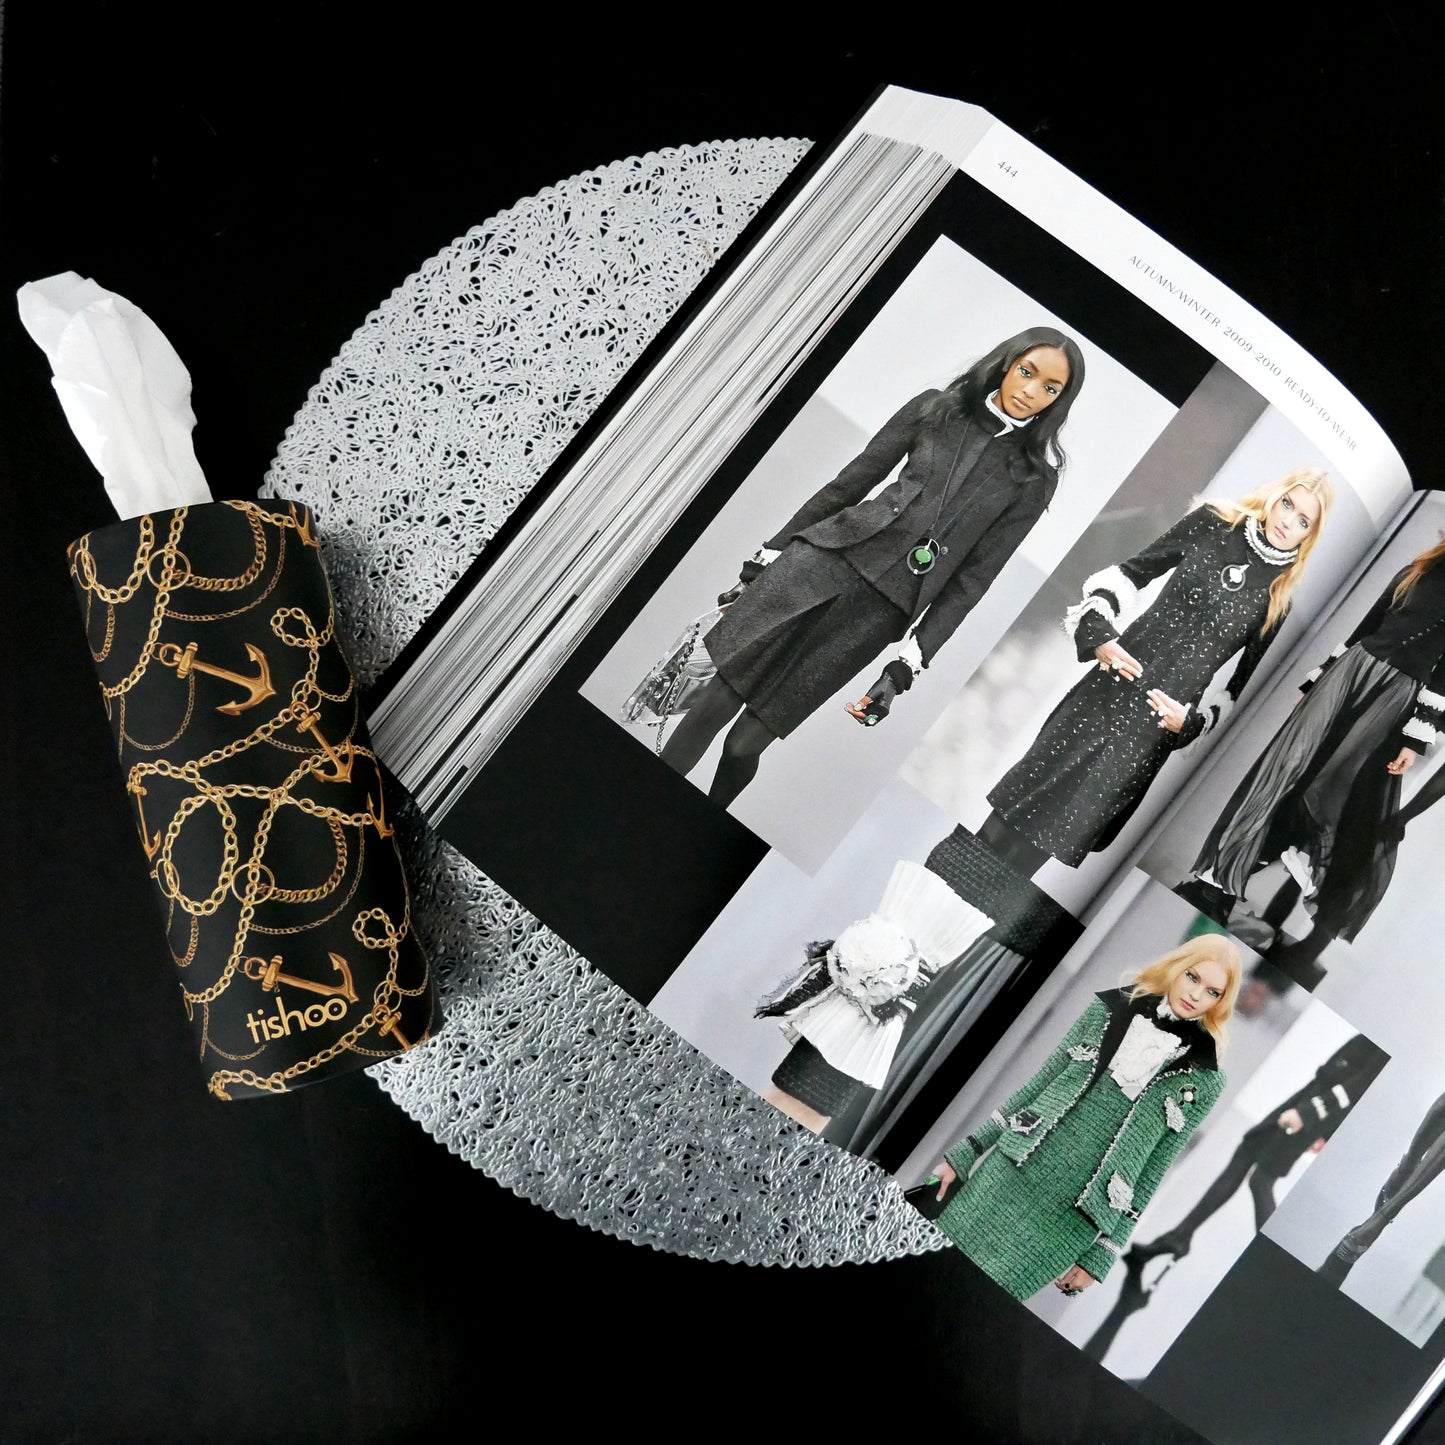 tishoo Luxury Tissues Black/Chains design on coffee table